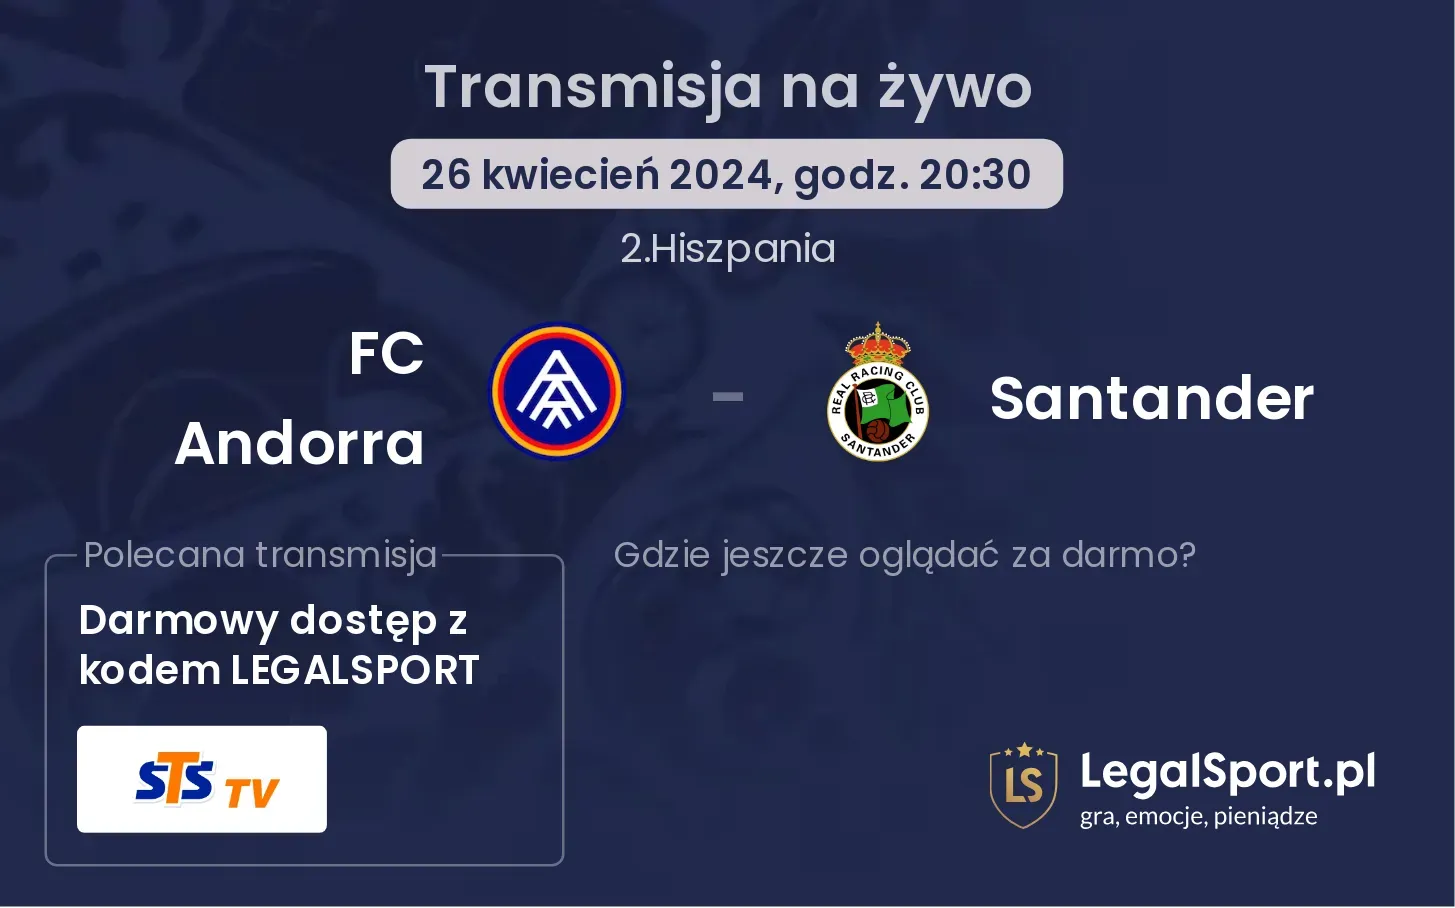 FC Andorra - Santander transmisja na żywo